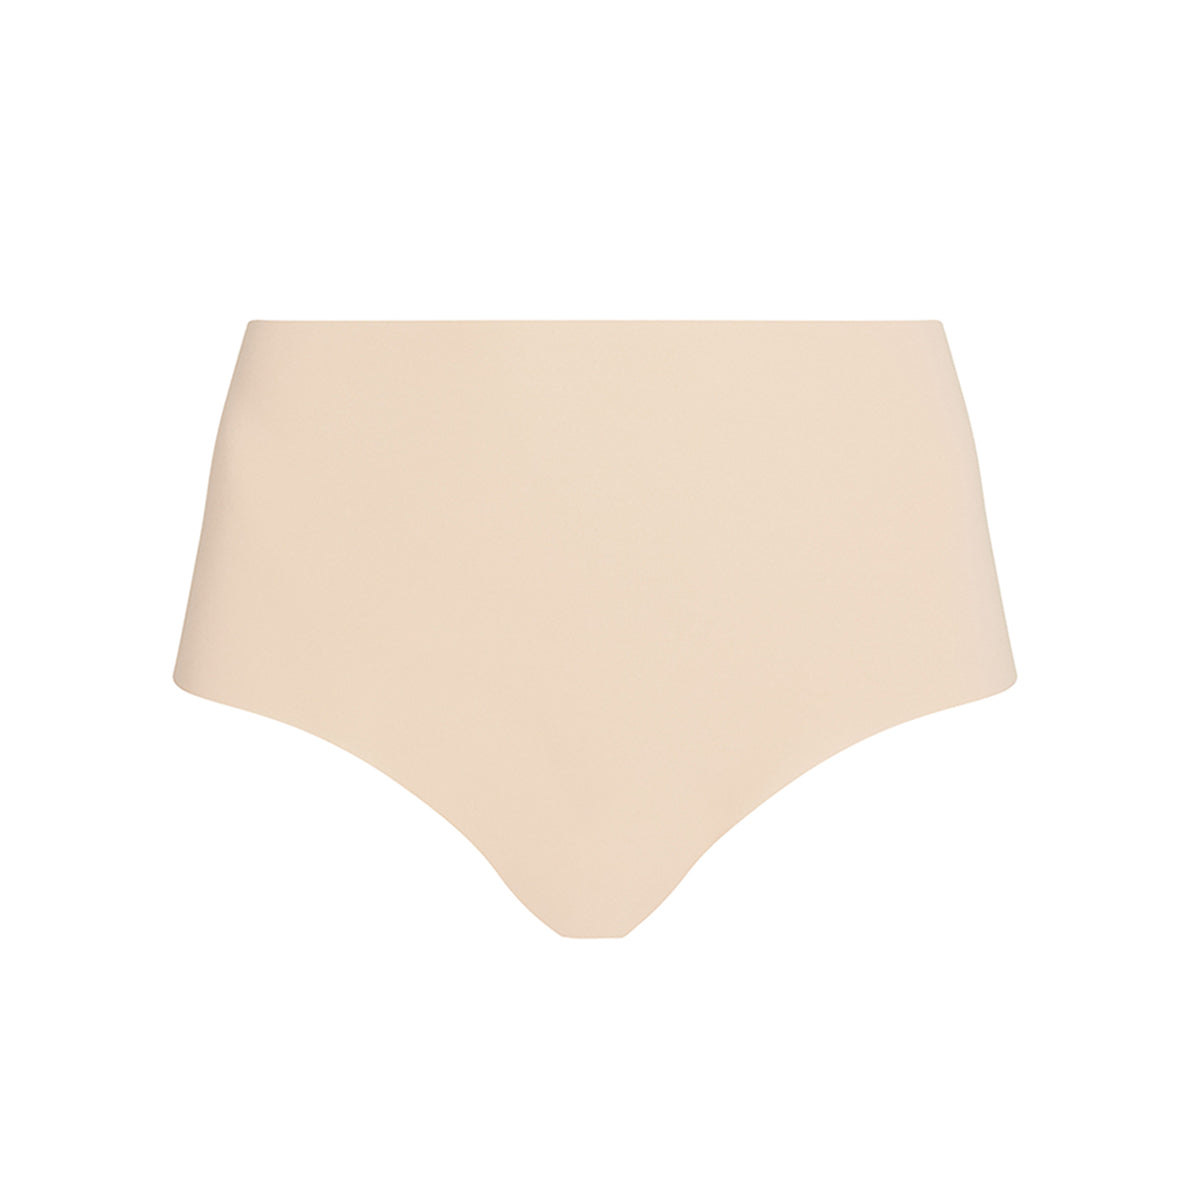 Commando brief true nude panty seamless underwear lingerie canada linea intima wearcommando